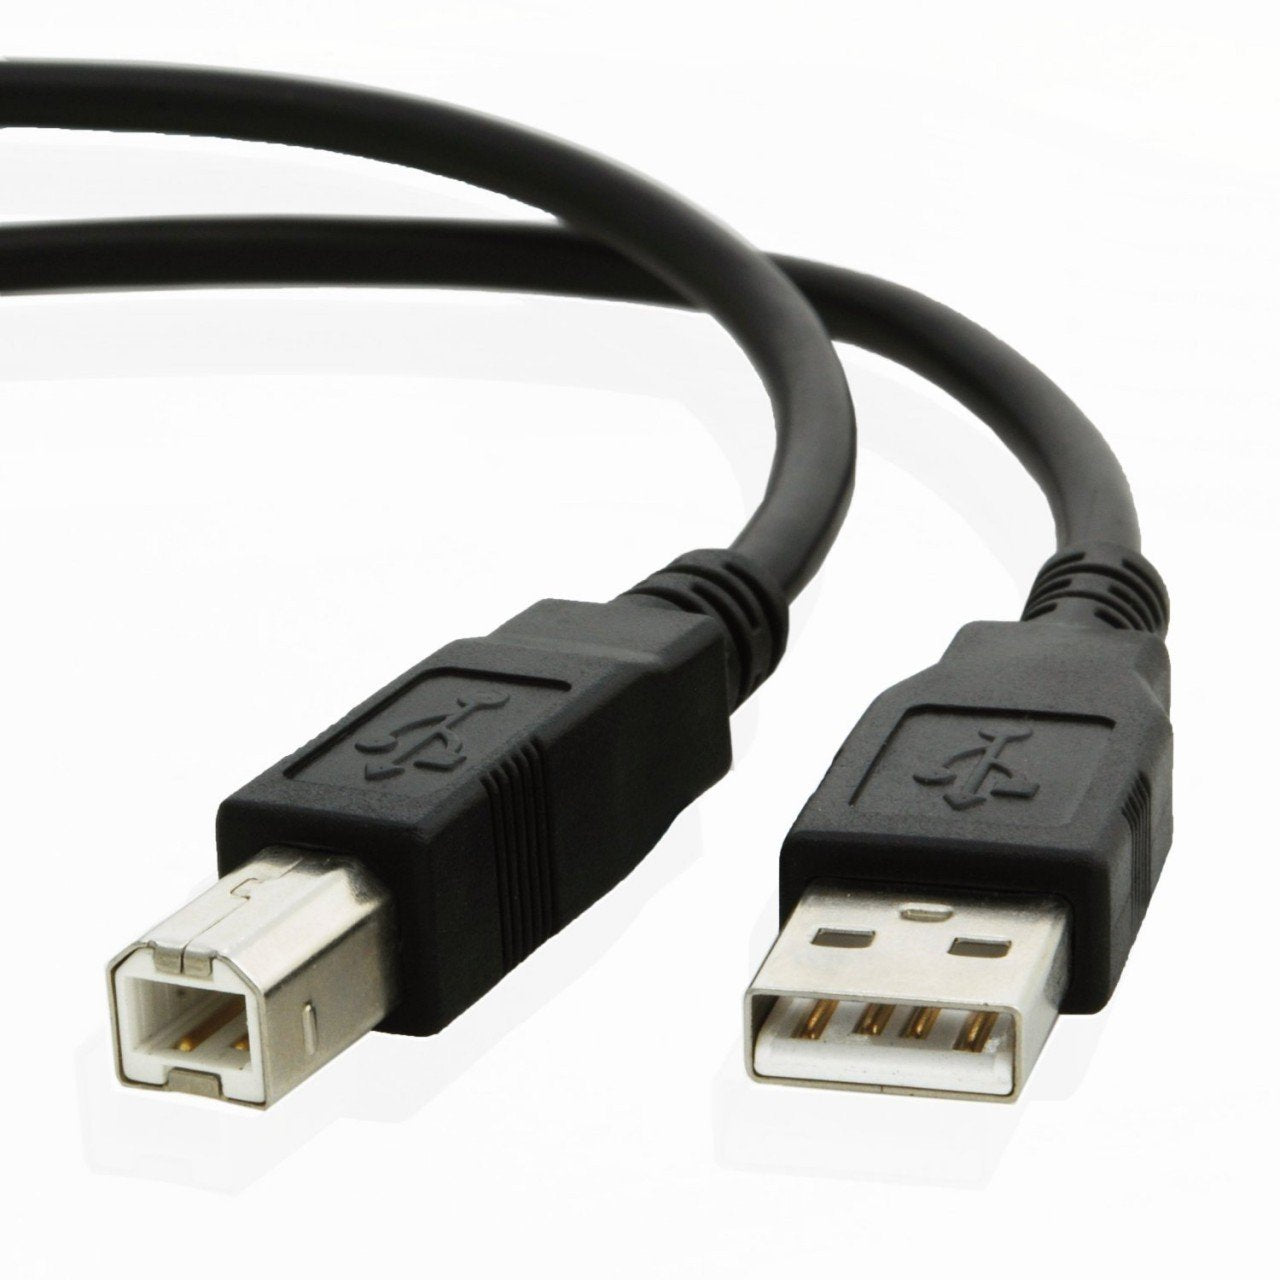 USB cable for Ifi Audio MICRO iDac